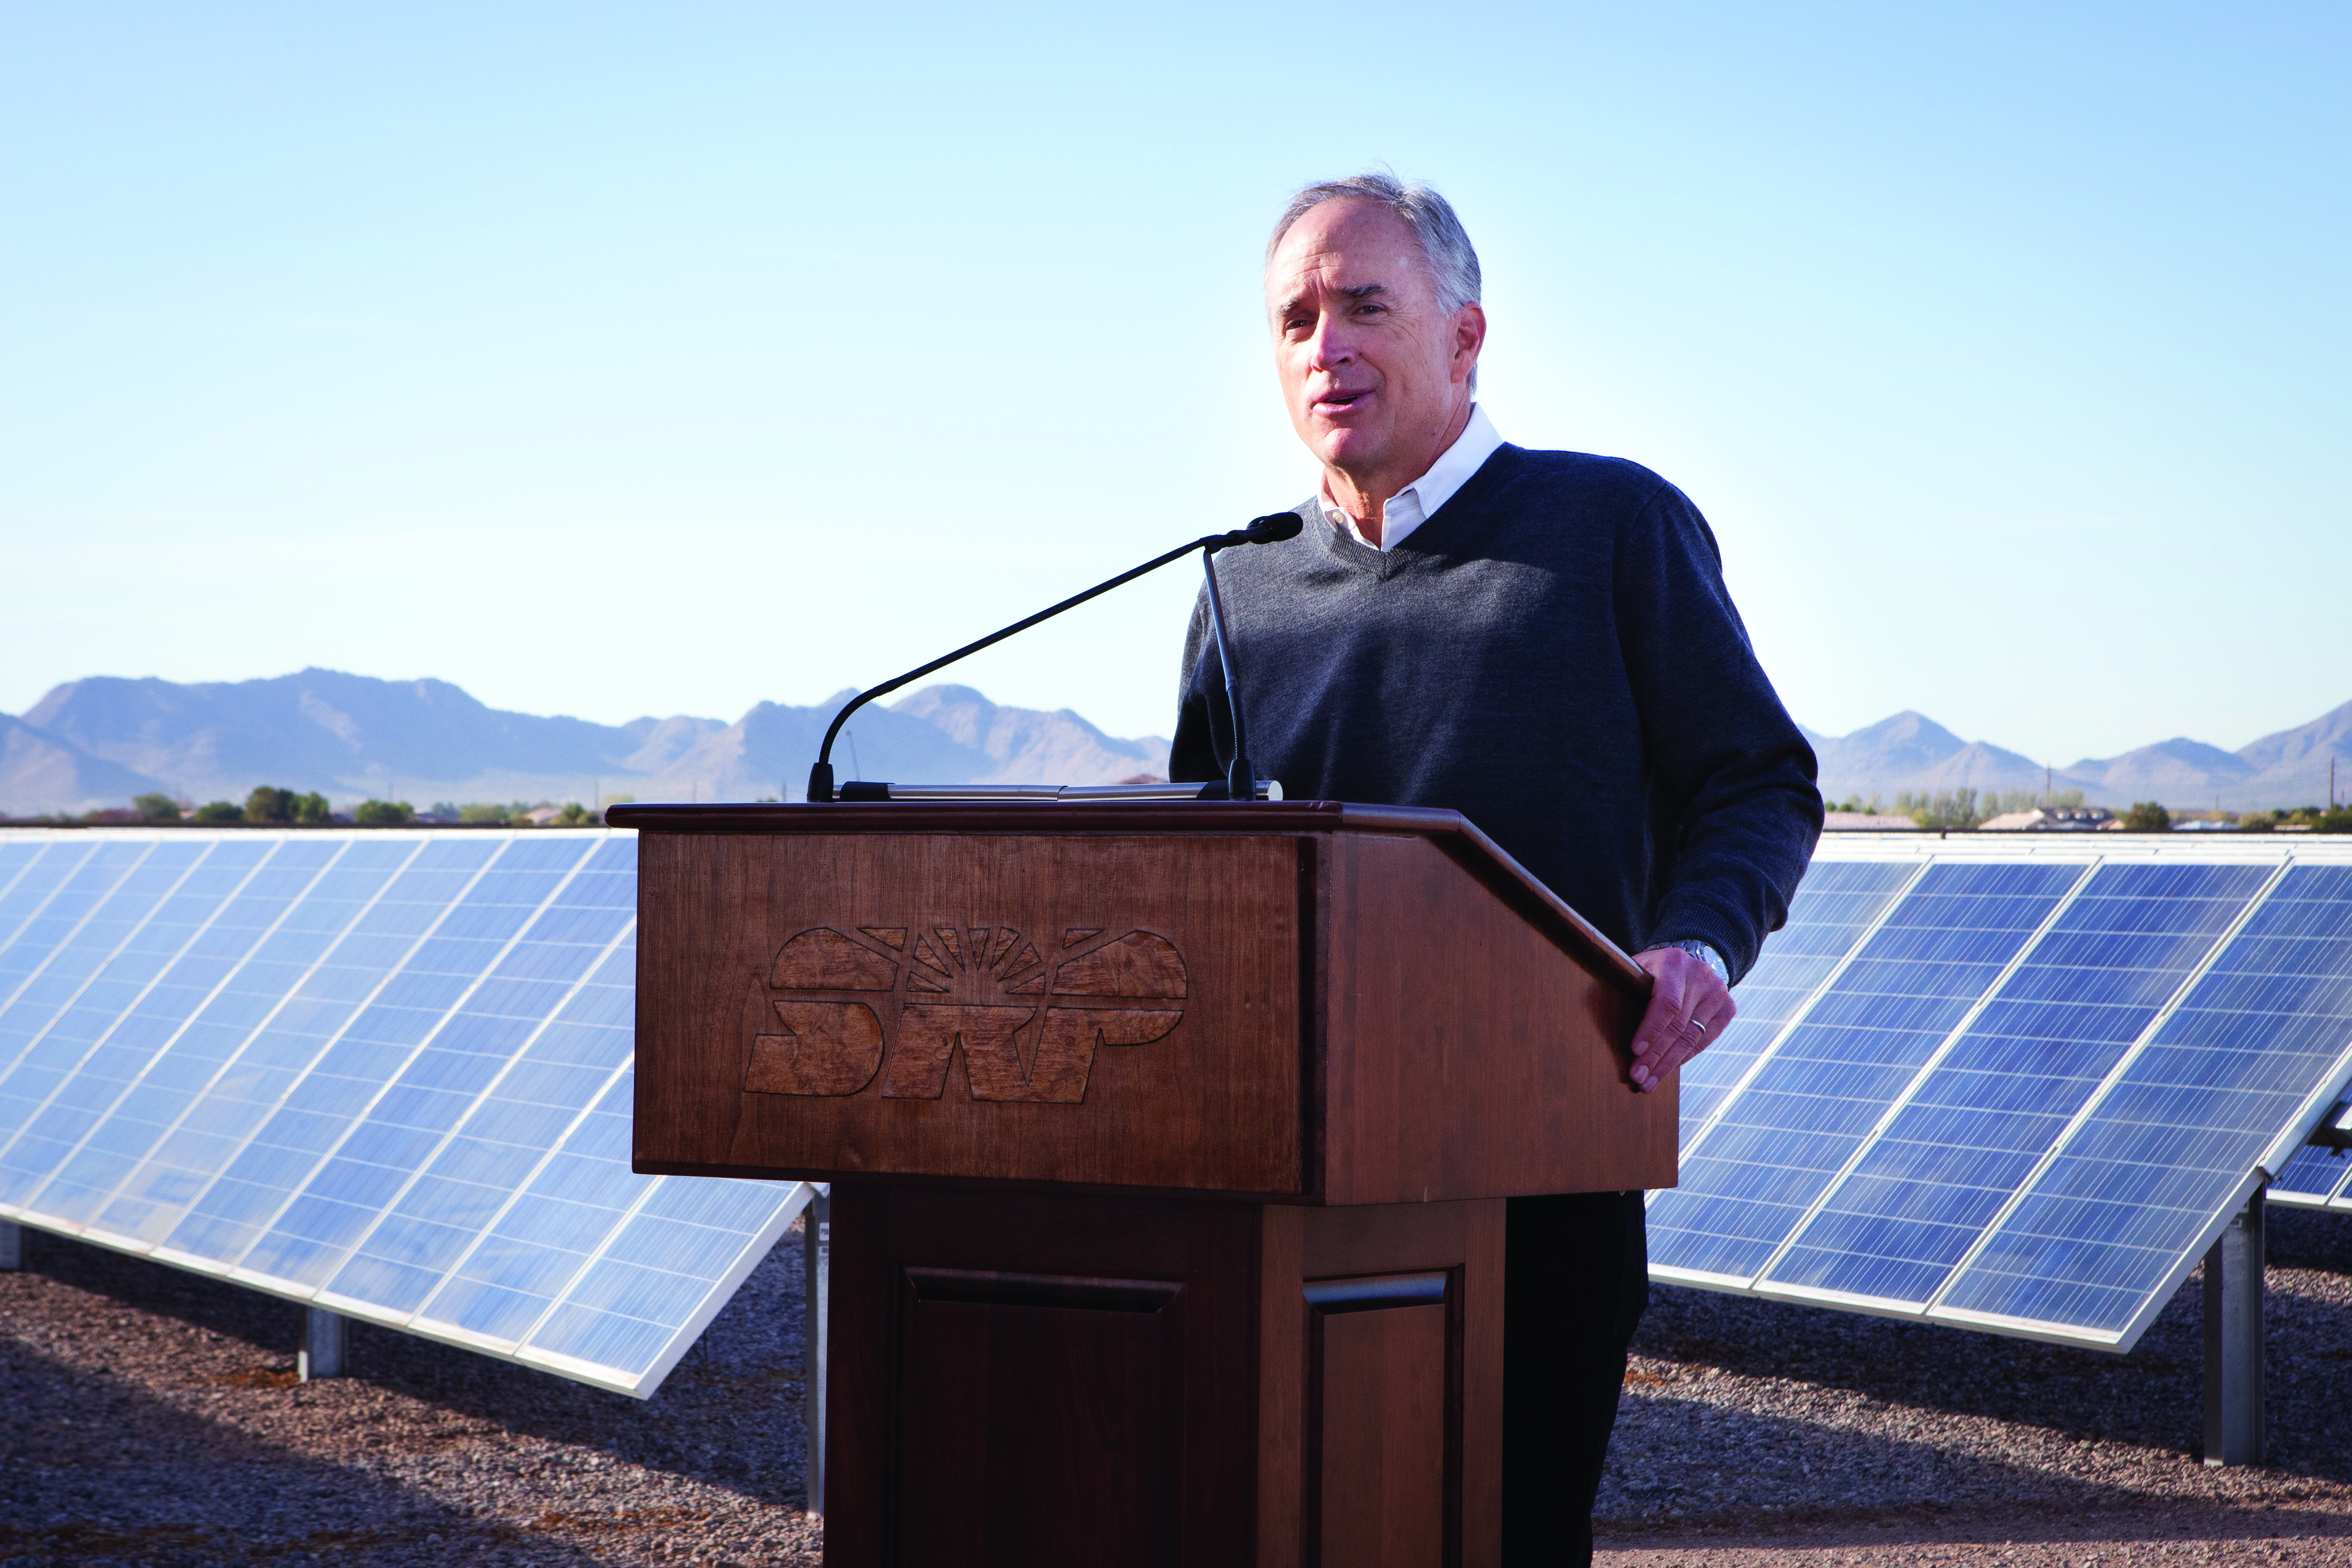 Queen Creek Solar Farm Dedication